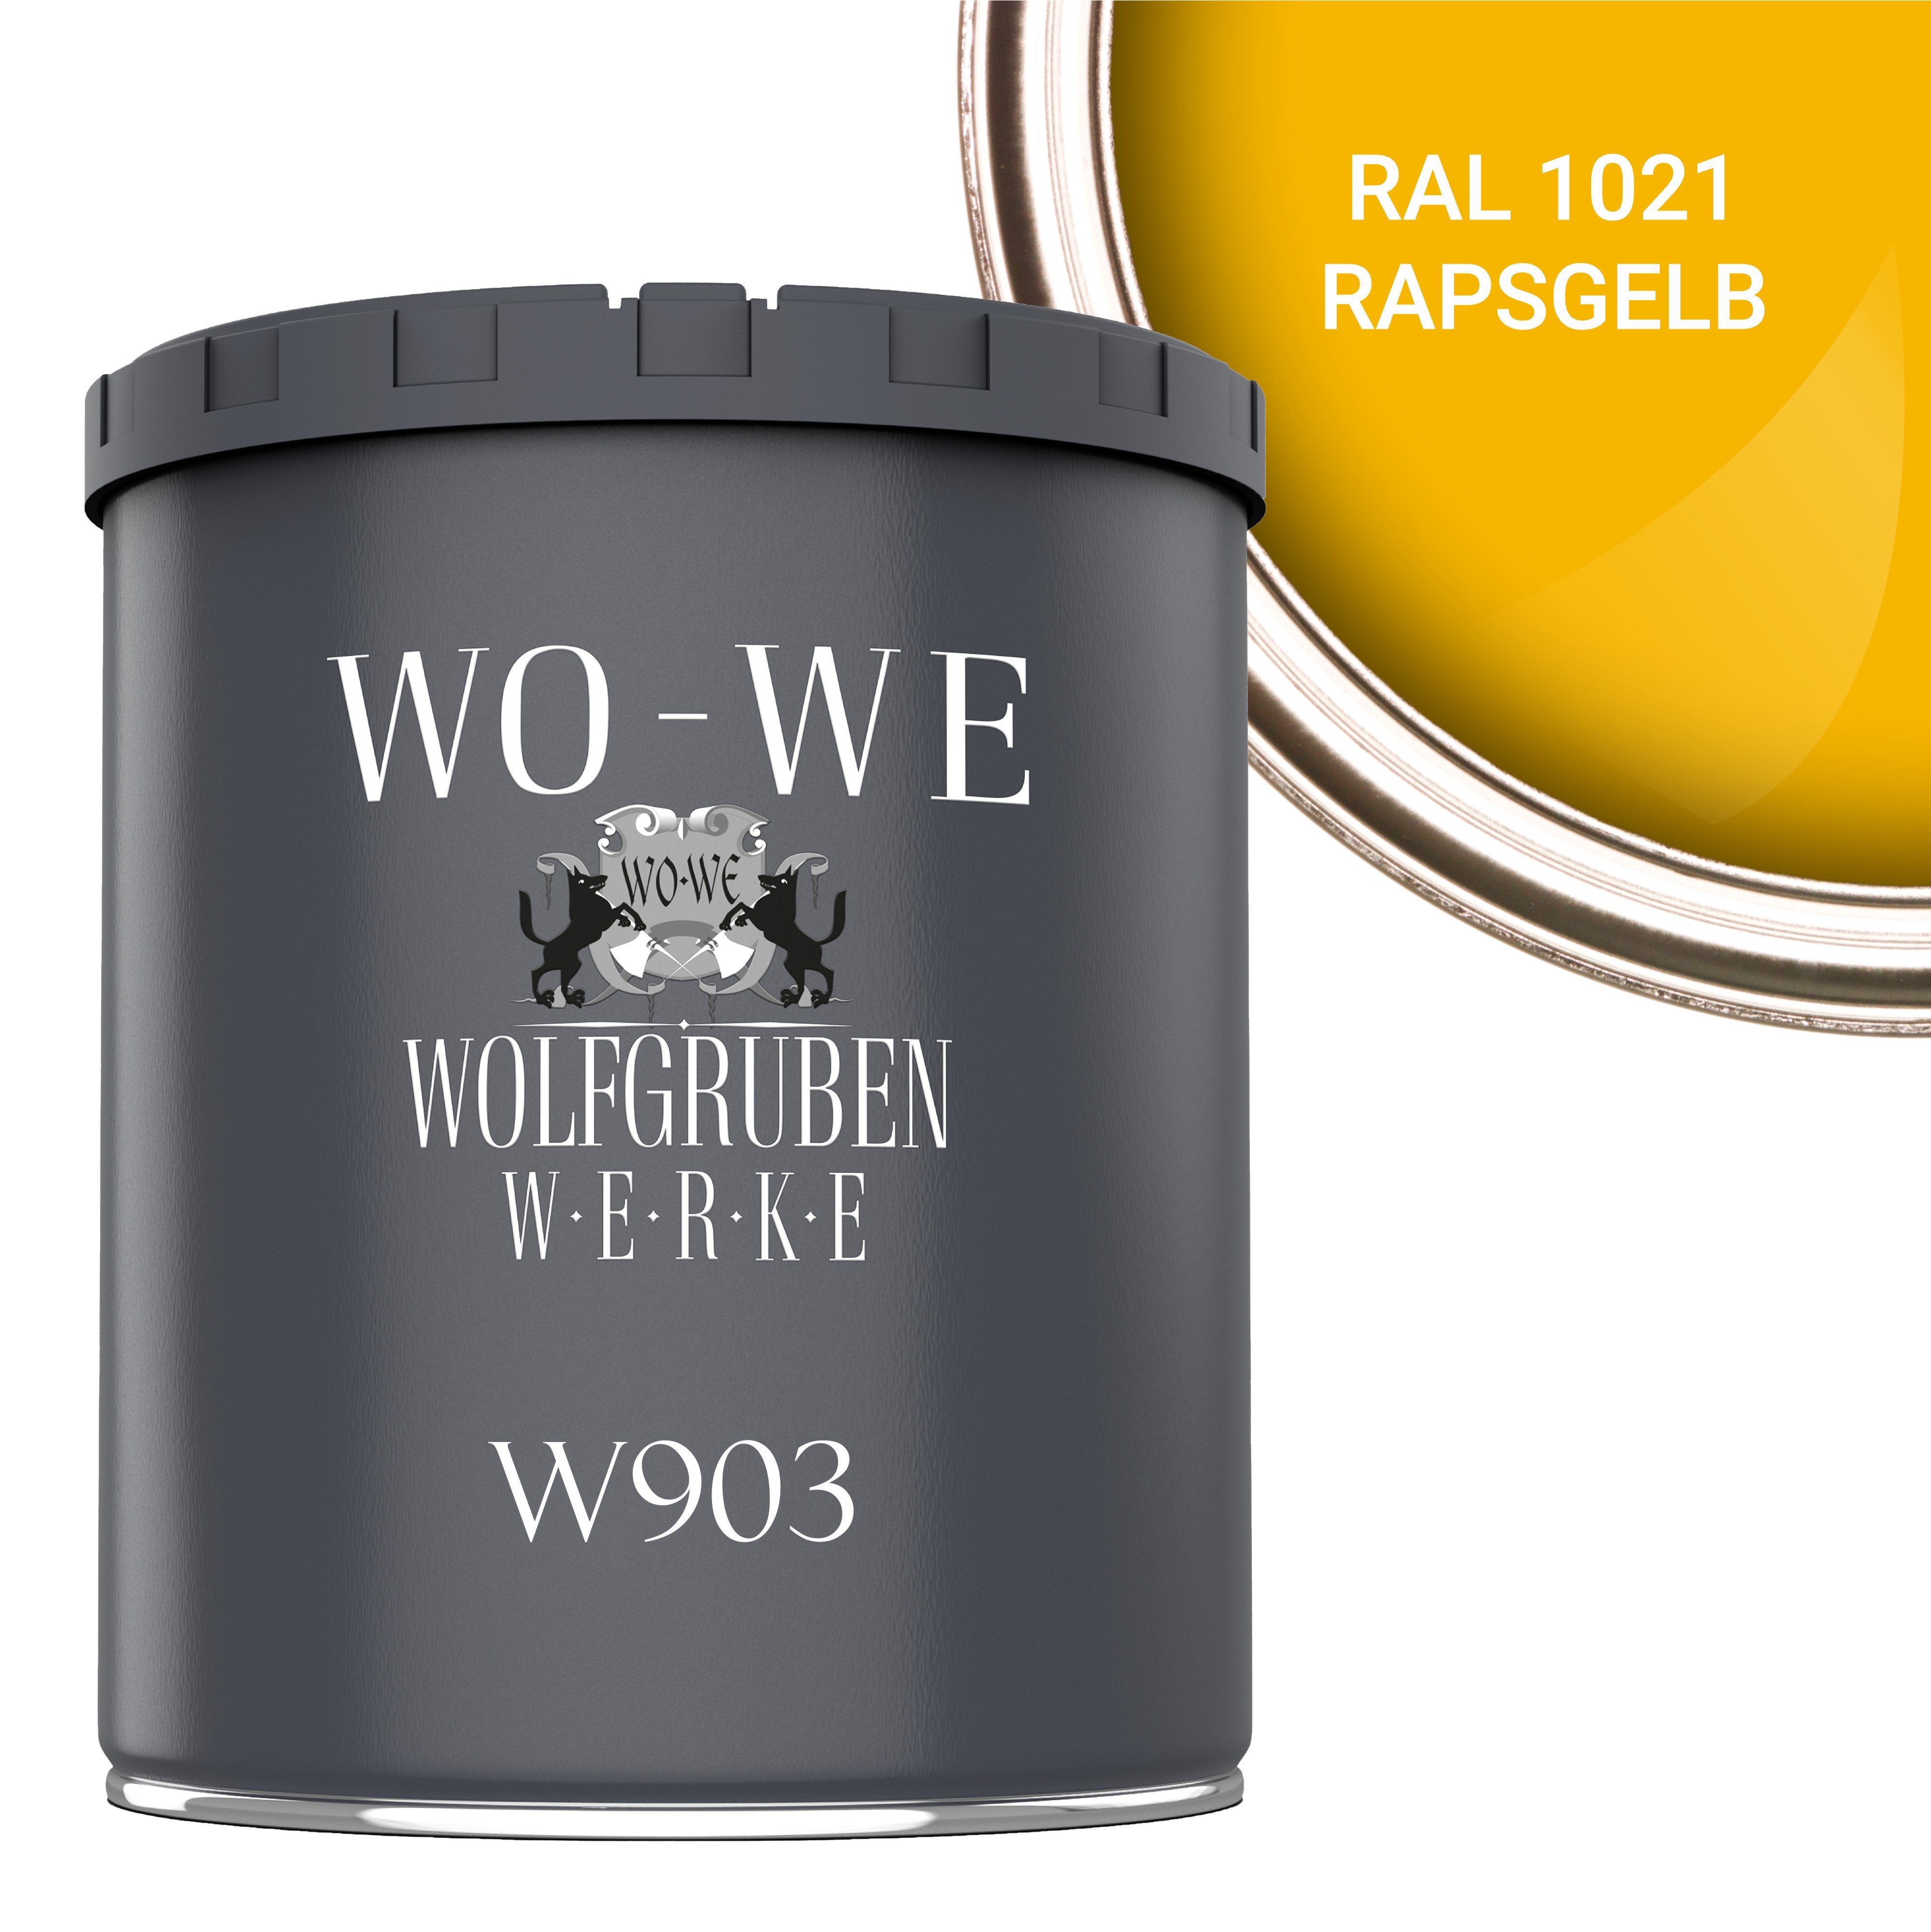 WO-WE Heizkörperlack Heizkörperfarbe Heizungsfarbe W903, 1-10L, Wasserbasis RAL 1021 Rapsgelb